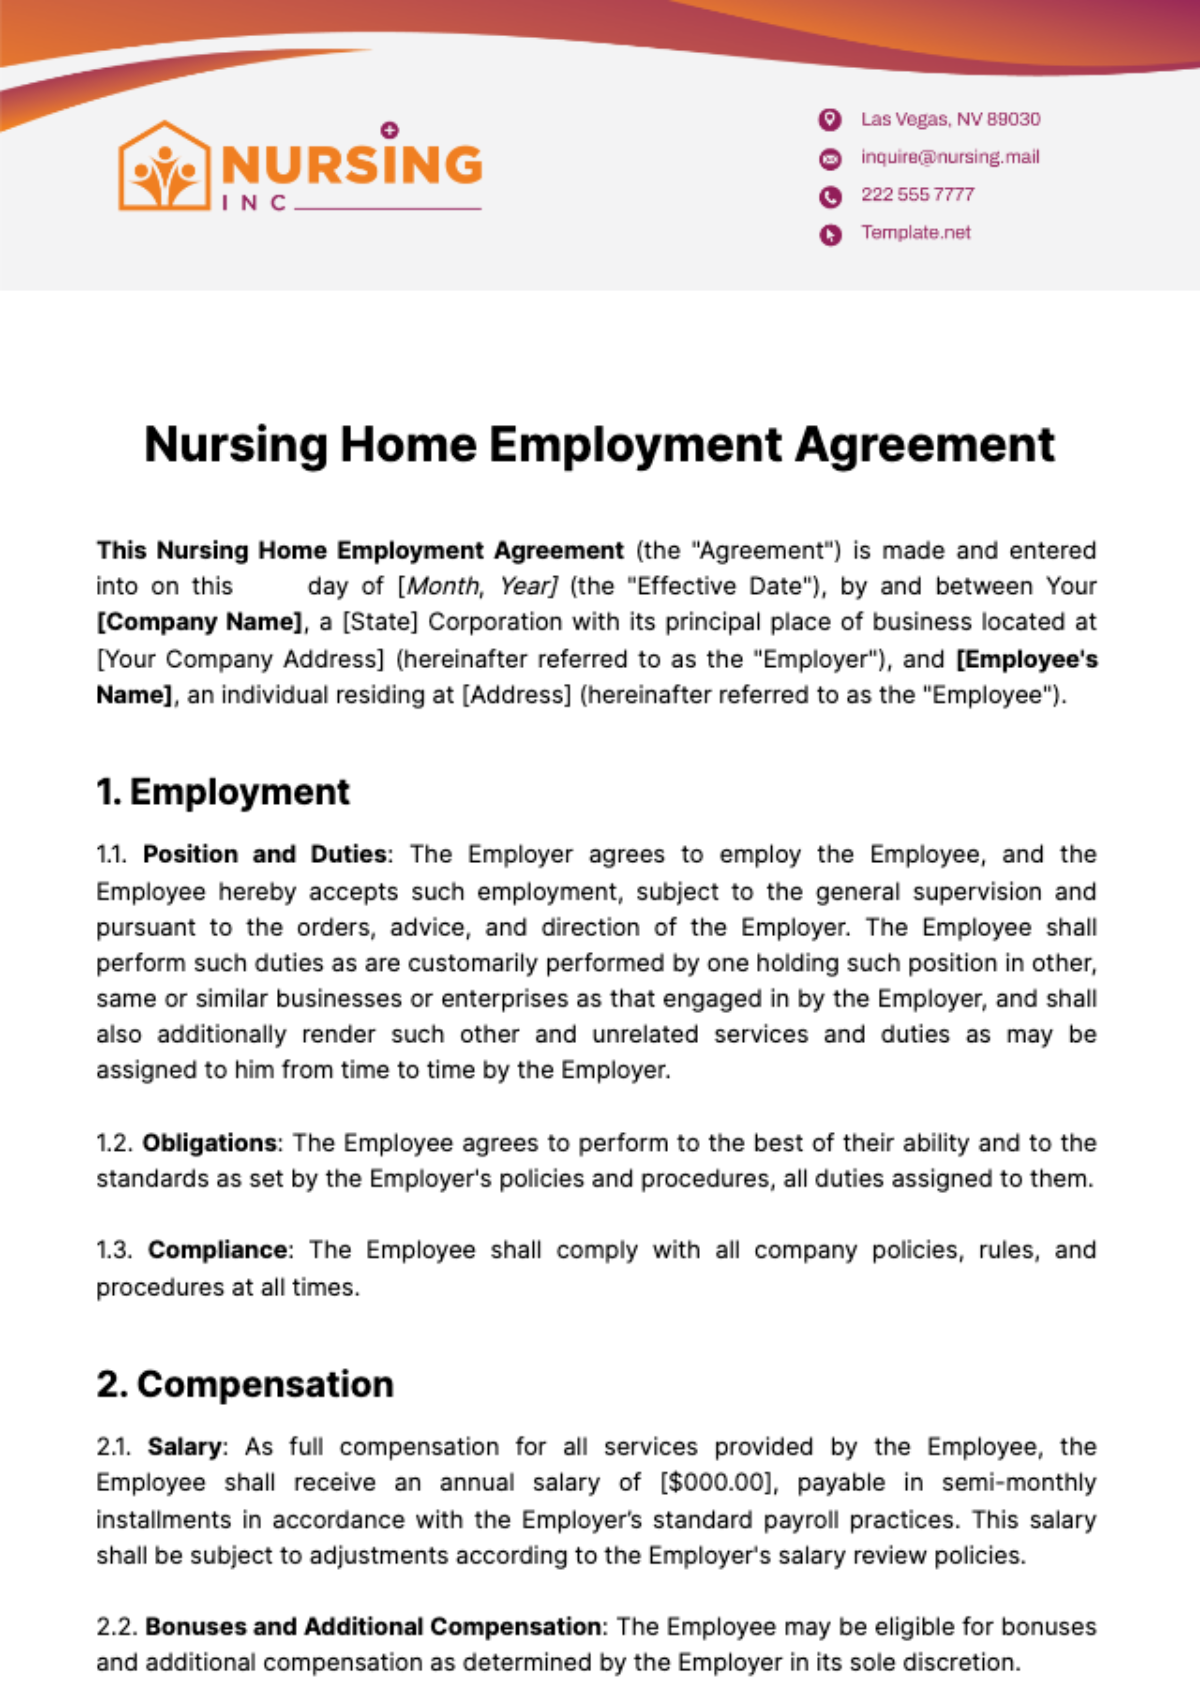 Nursing Home Employment Agreement Template